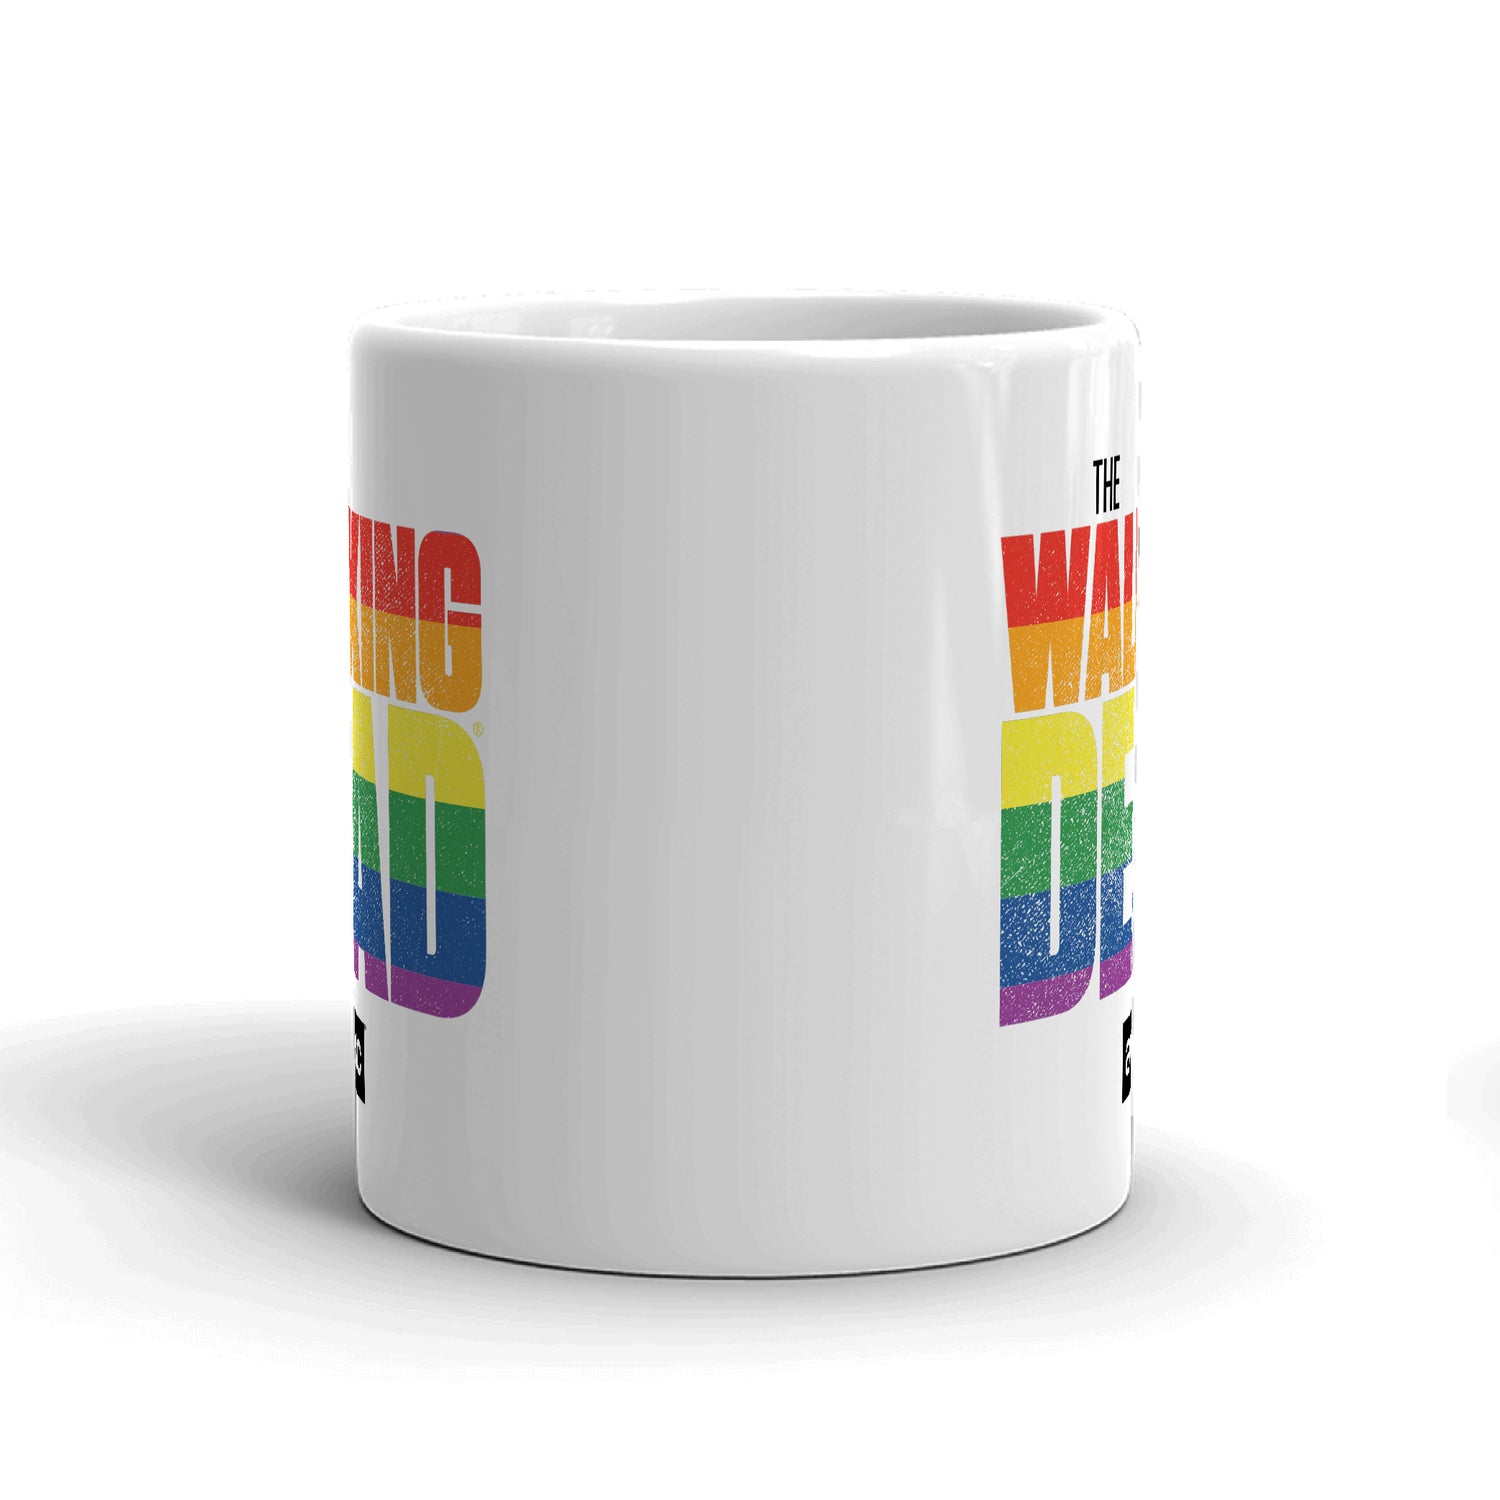 The Walking Dead Pride Logo White Mug